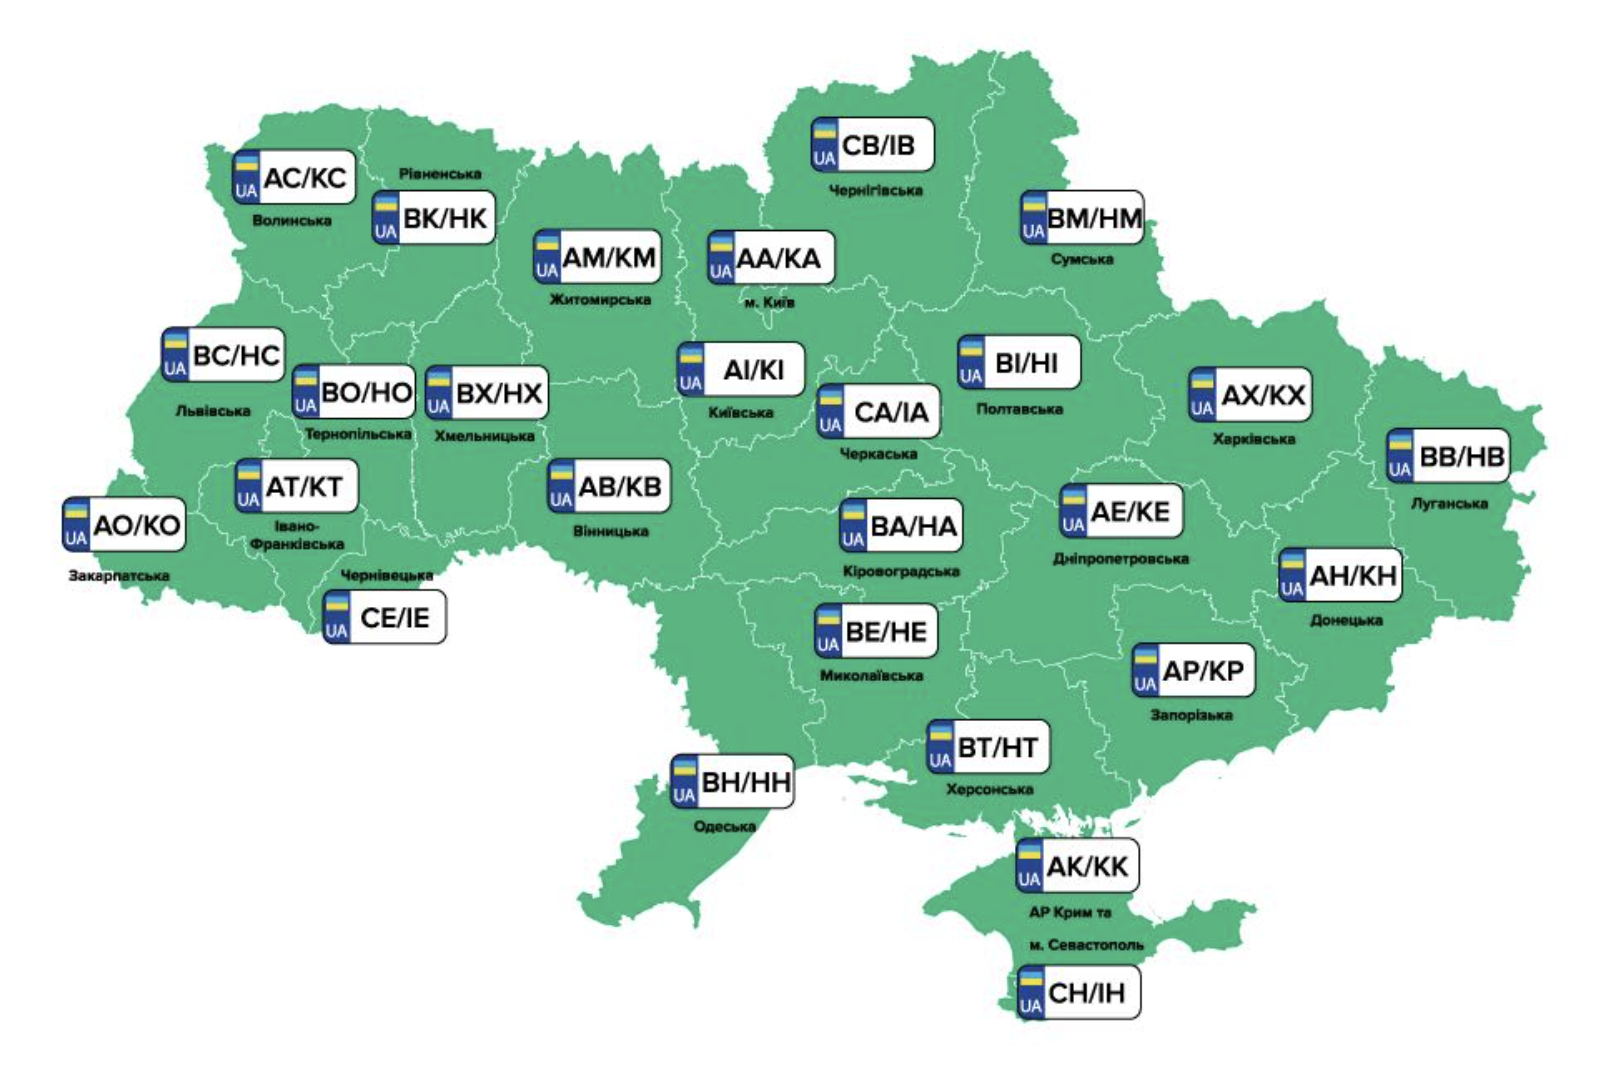 reg number codes in ukraine